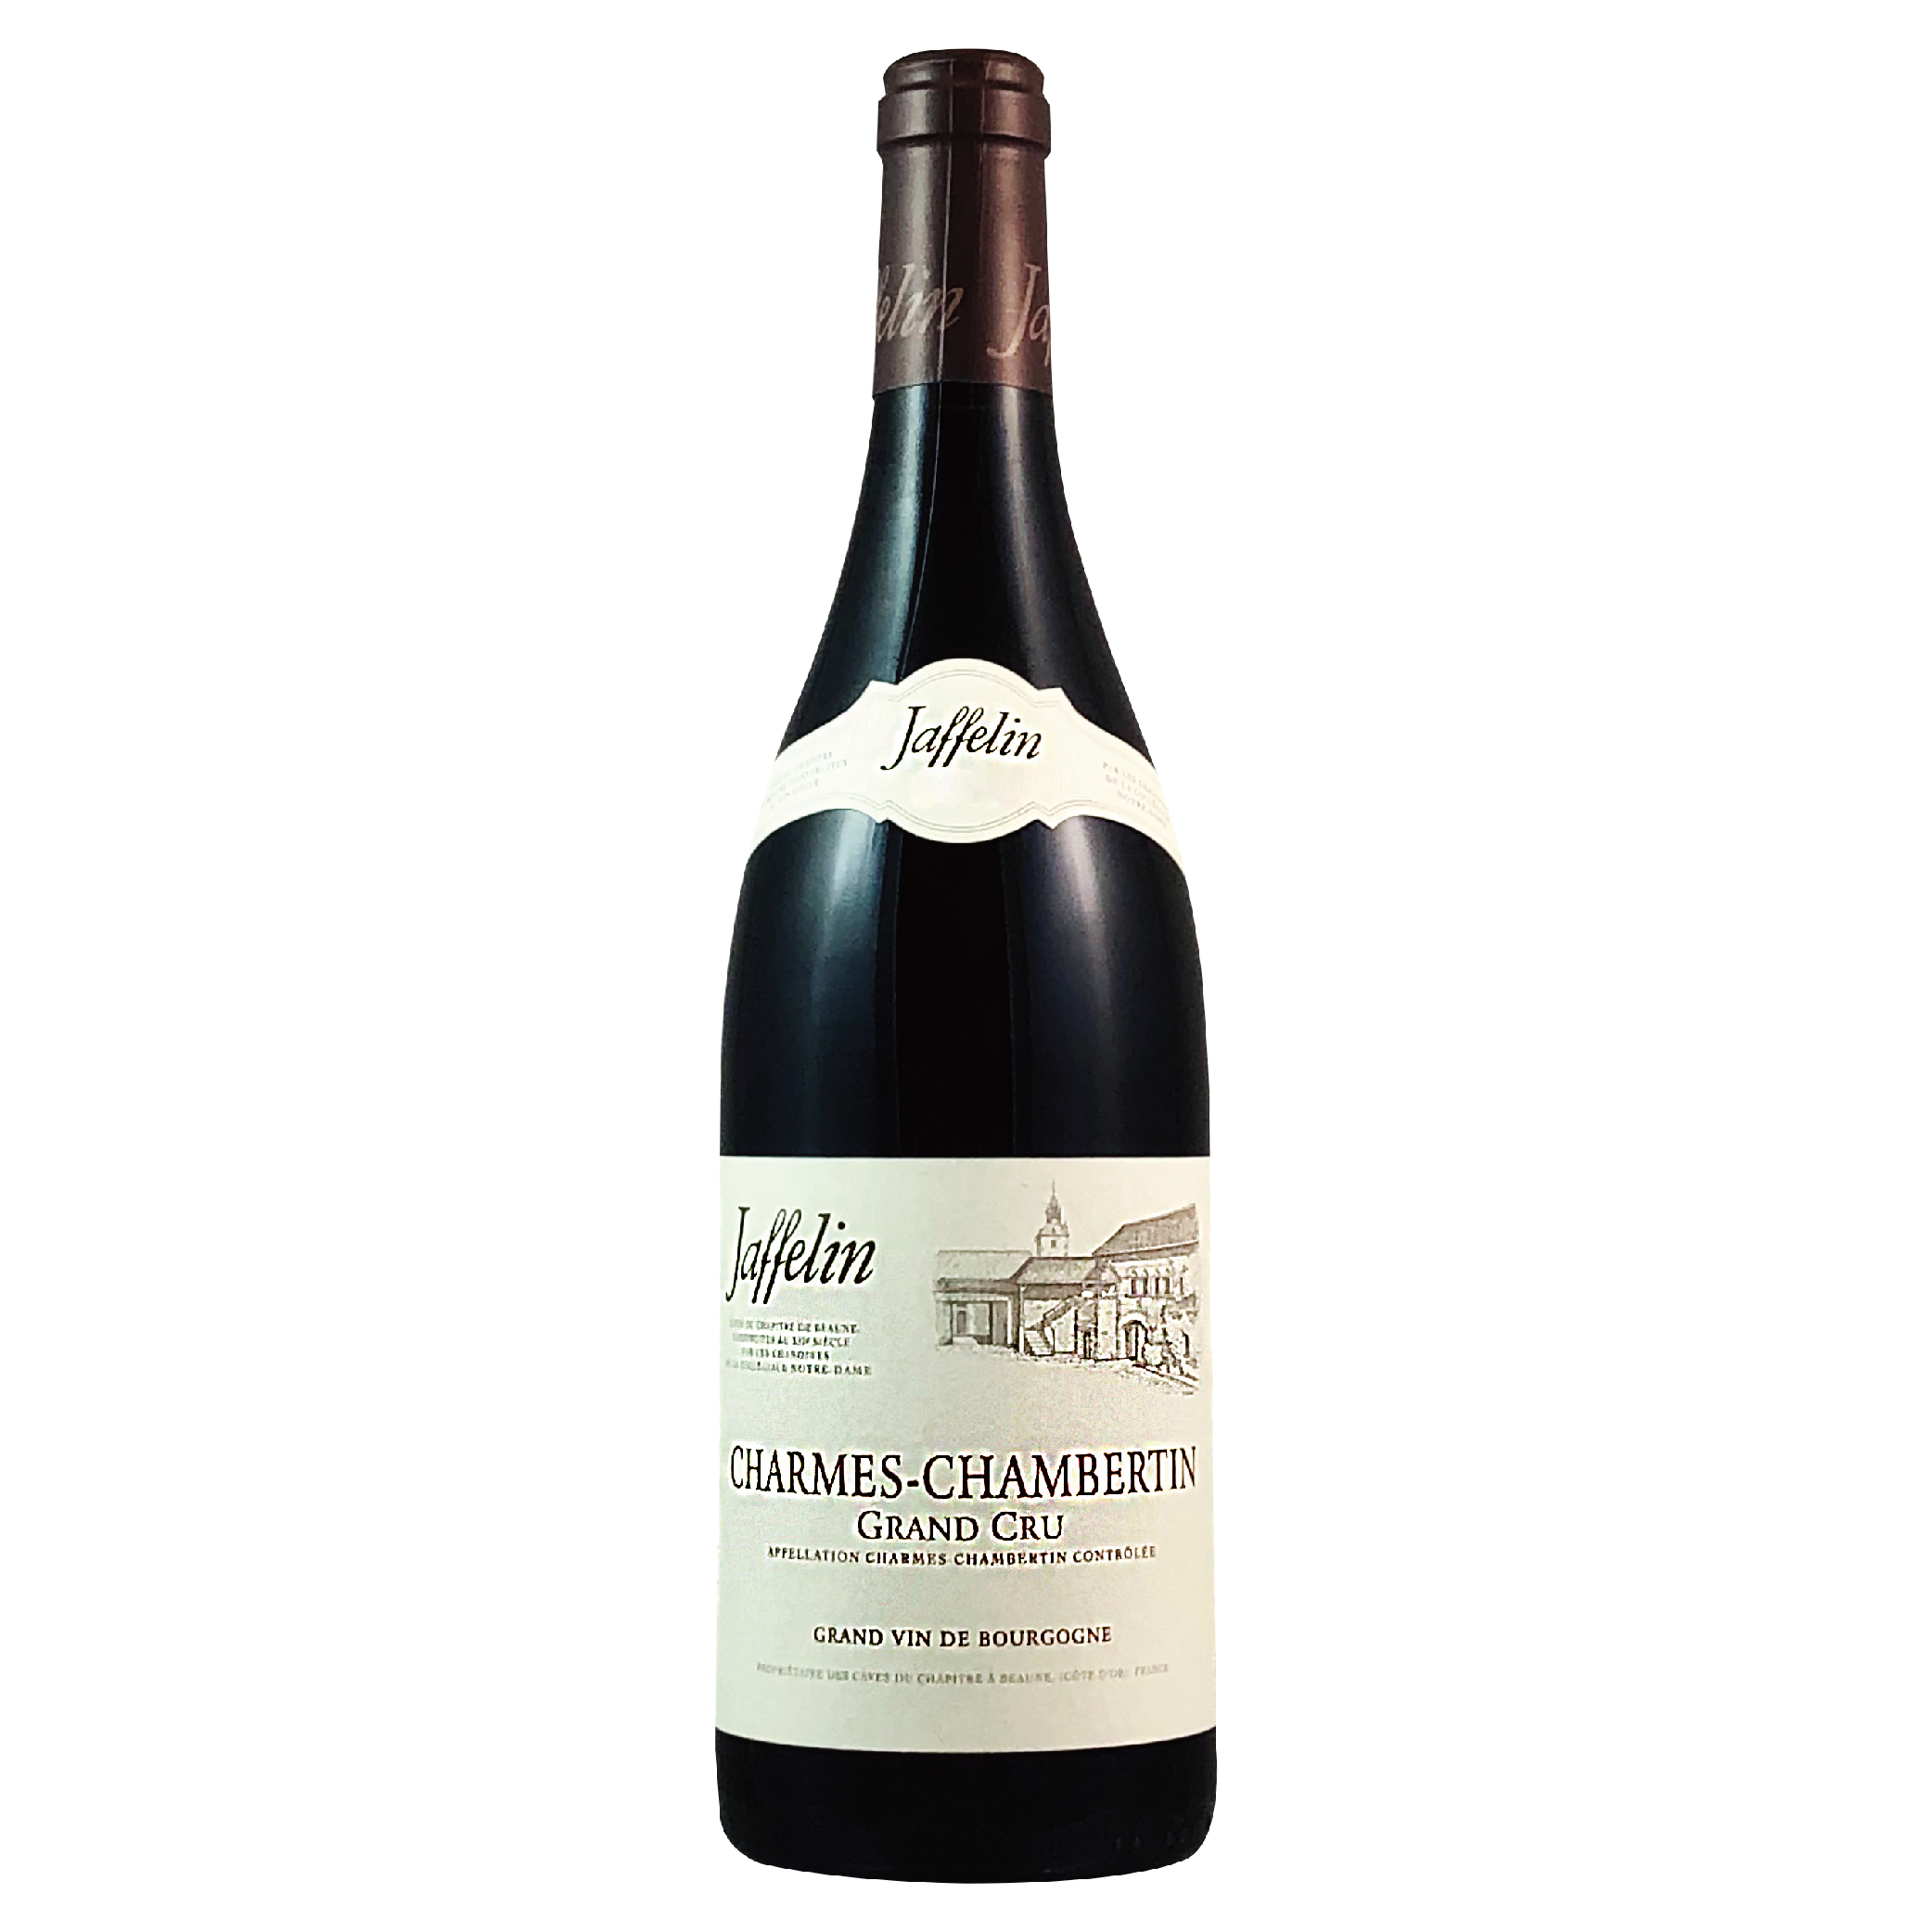 2007 Jaffelin Charmes-Chambertin Grand Cru / Charmes-Chambertin